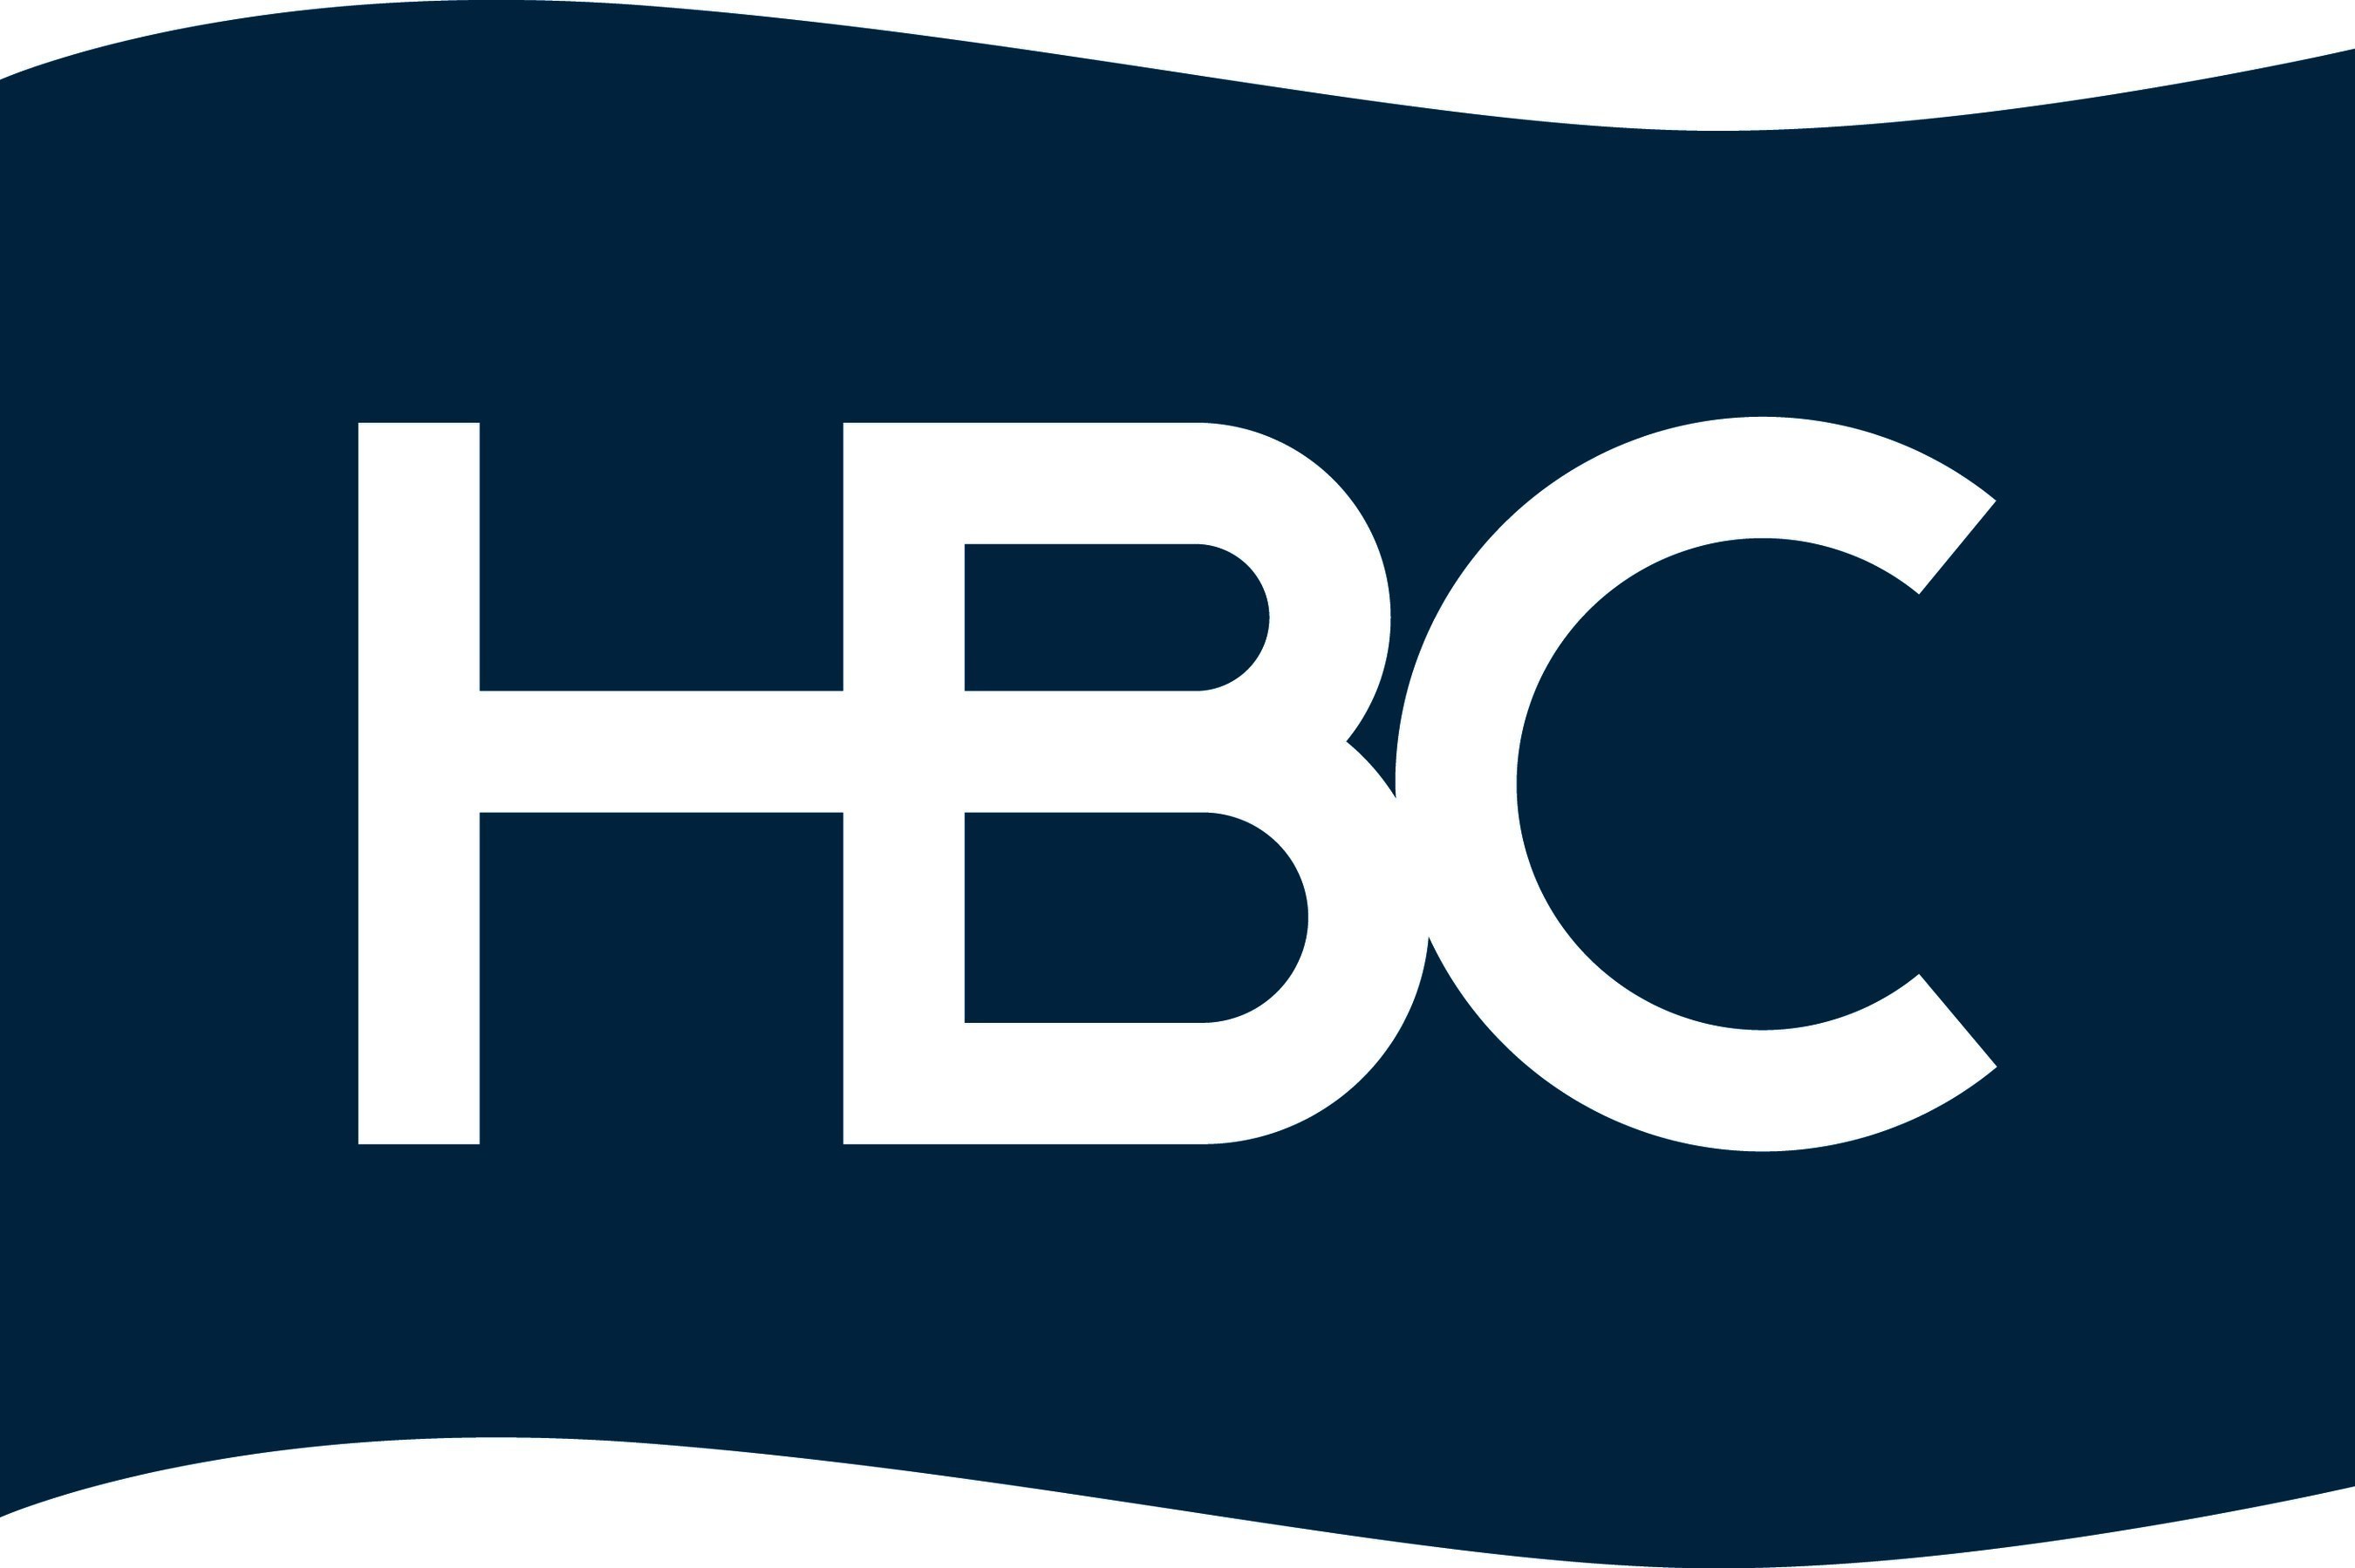 HBC logo